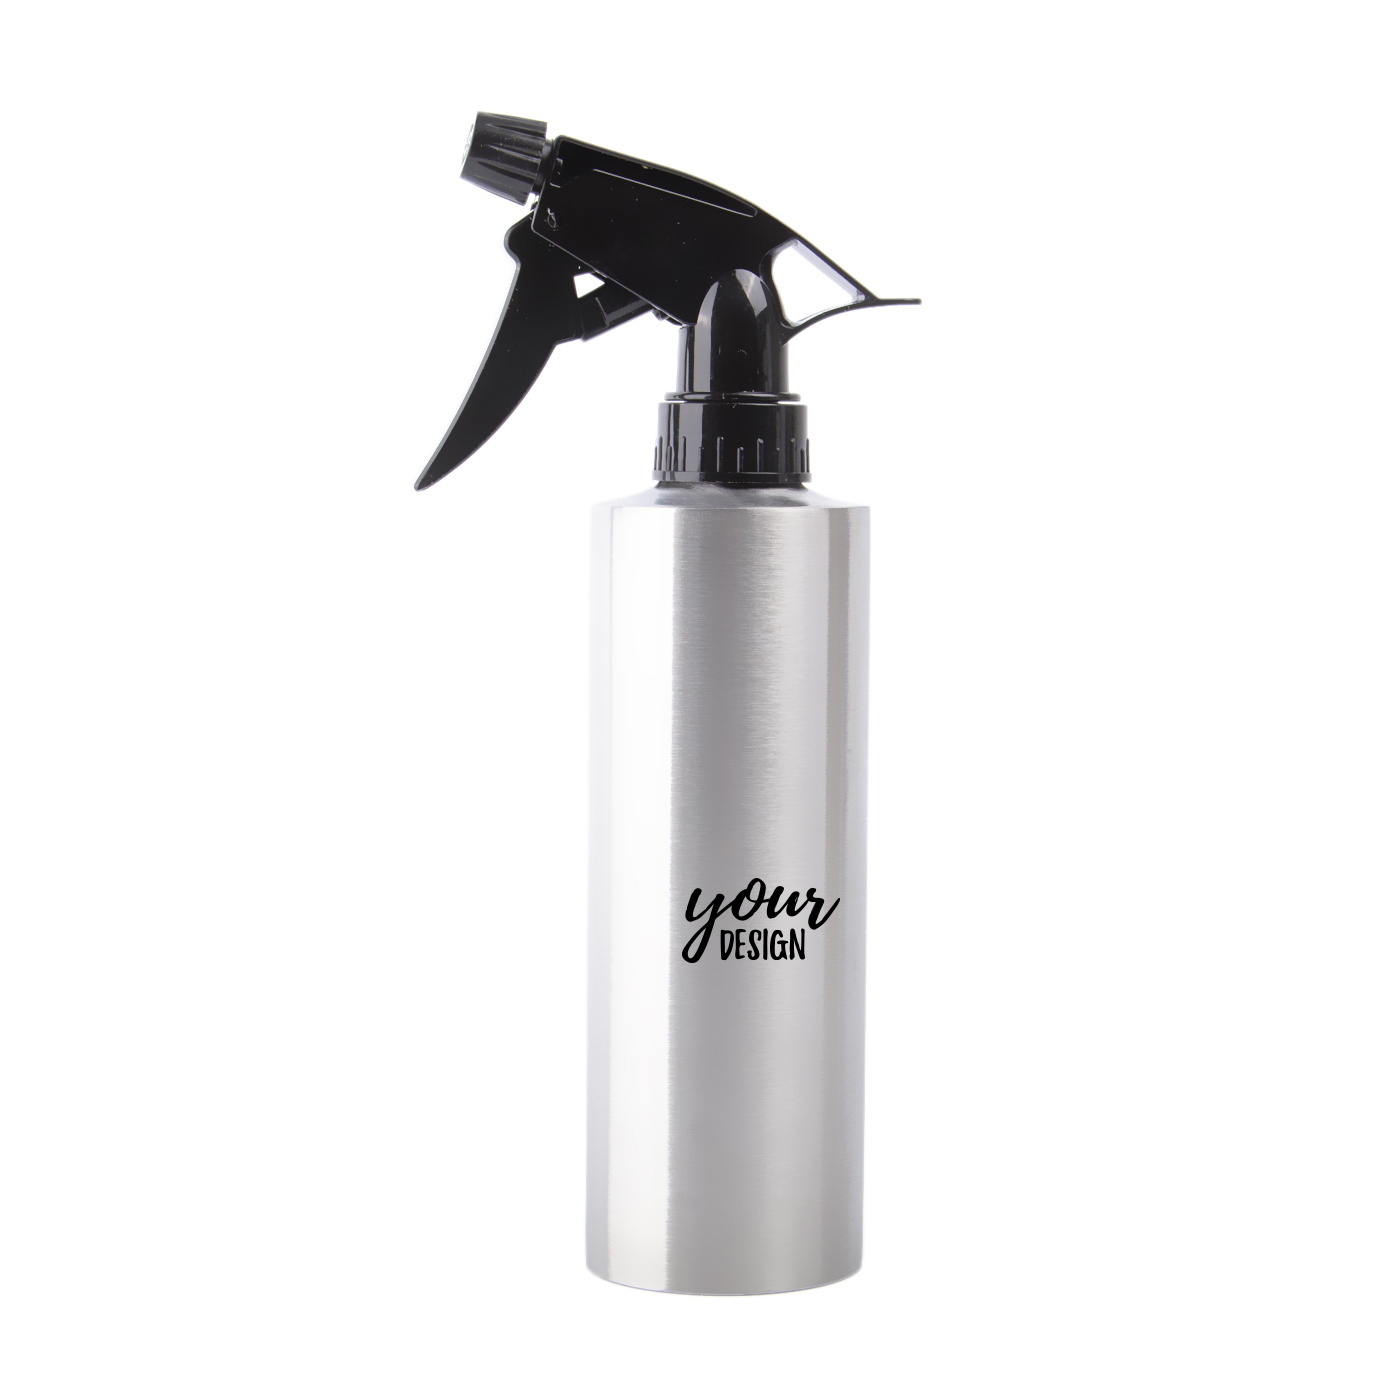 12 oz. Stainless Steel Spray Bottle With Trigger Sprayer2